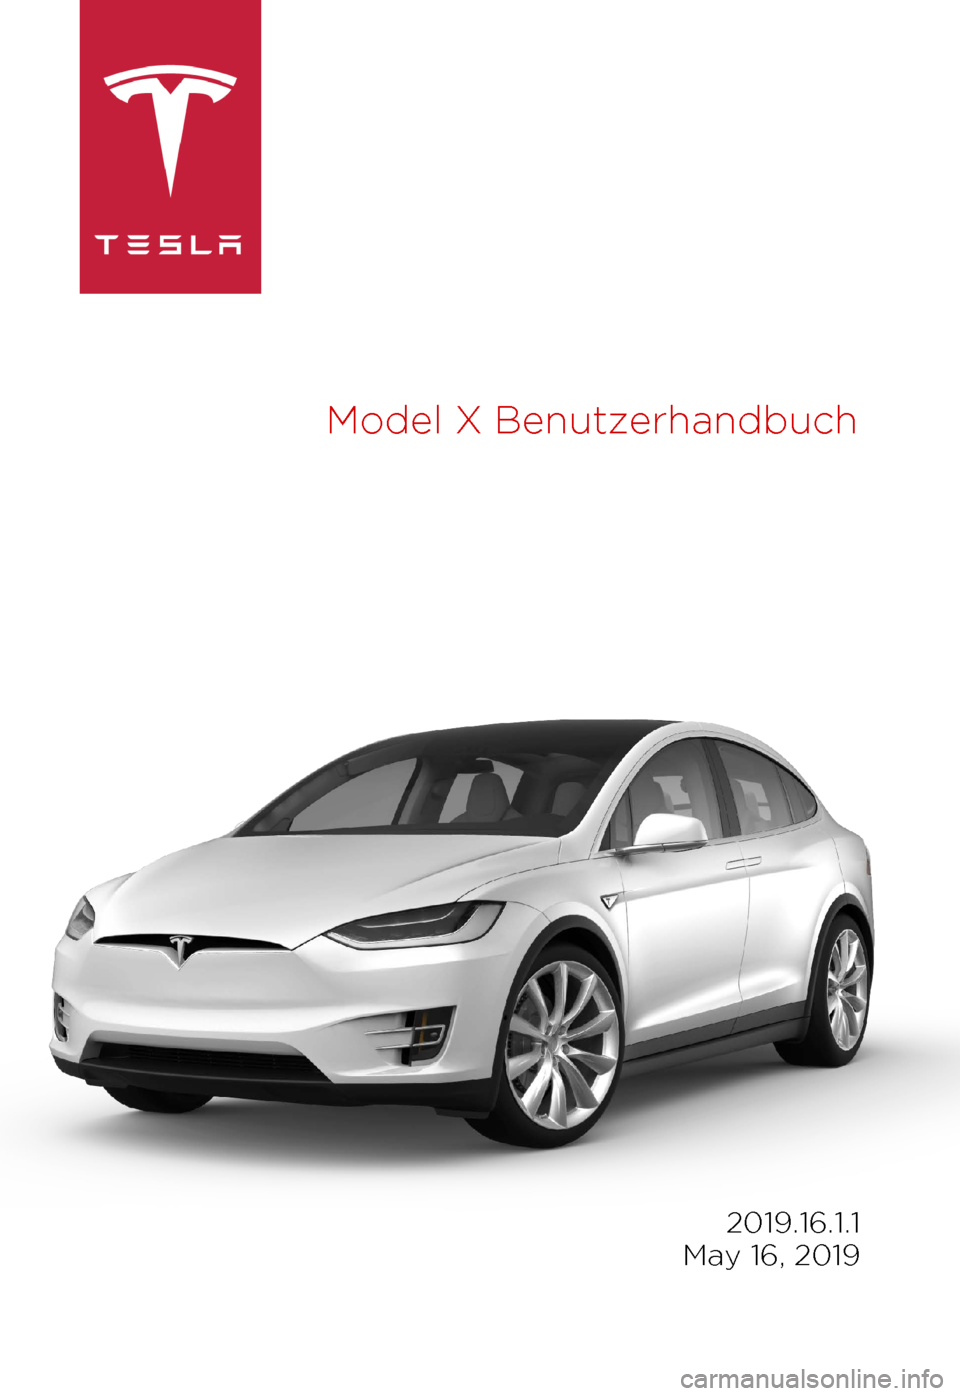 TESLA MODEL X 2019  Betriebsanleitung (in German)  Model
 X  Benutzerhandbuch 2019.16.1.1
 
May 16, 2019 